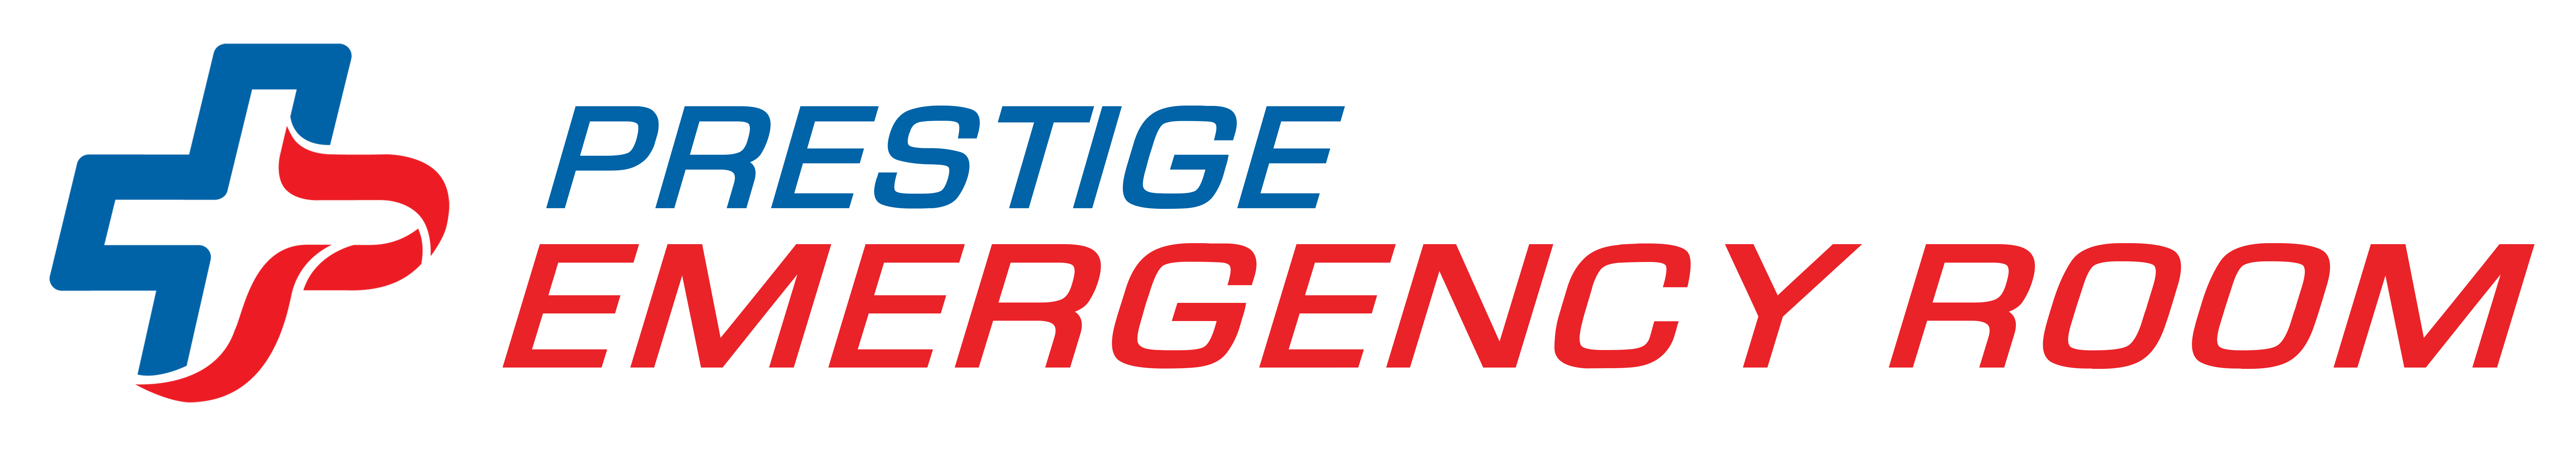 Prestige Emergency Room - 1604 / Bitters Logo